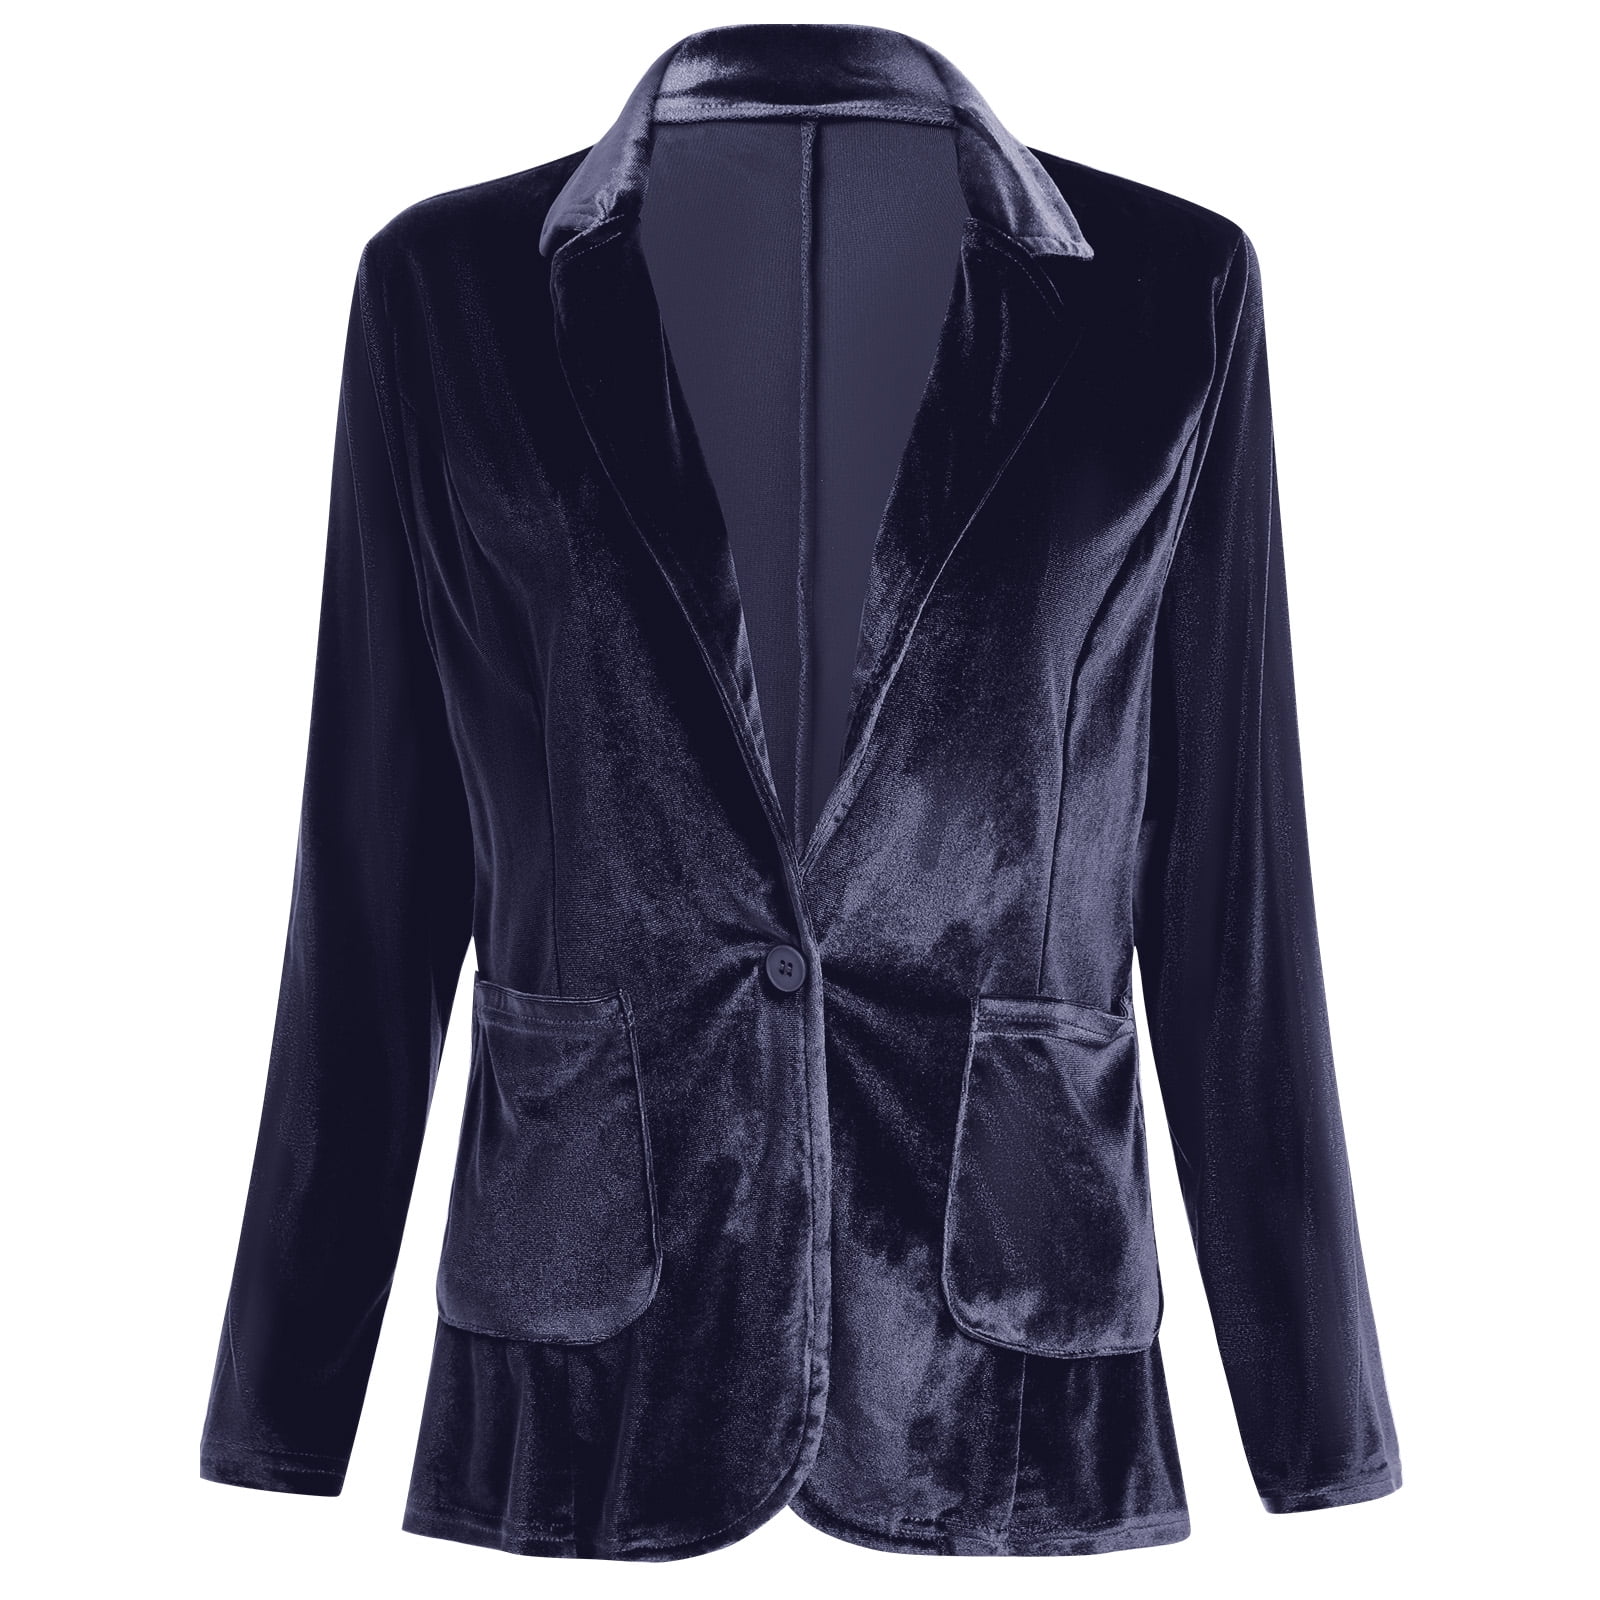 IDOPIP Women's Velvet Blazer Jacket Long Sleeve Open Front Cardigan ...